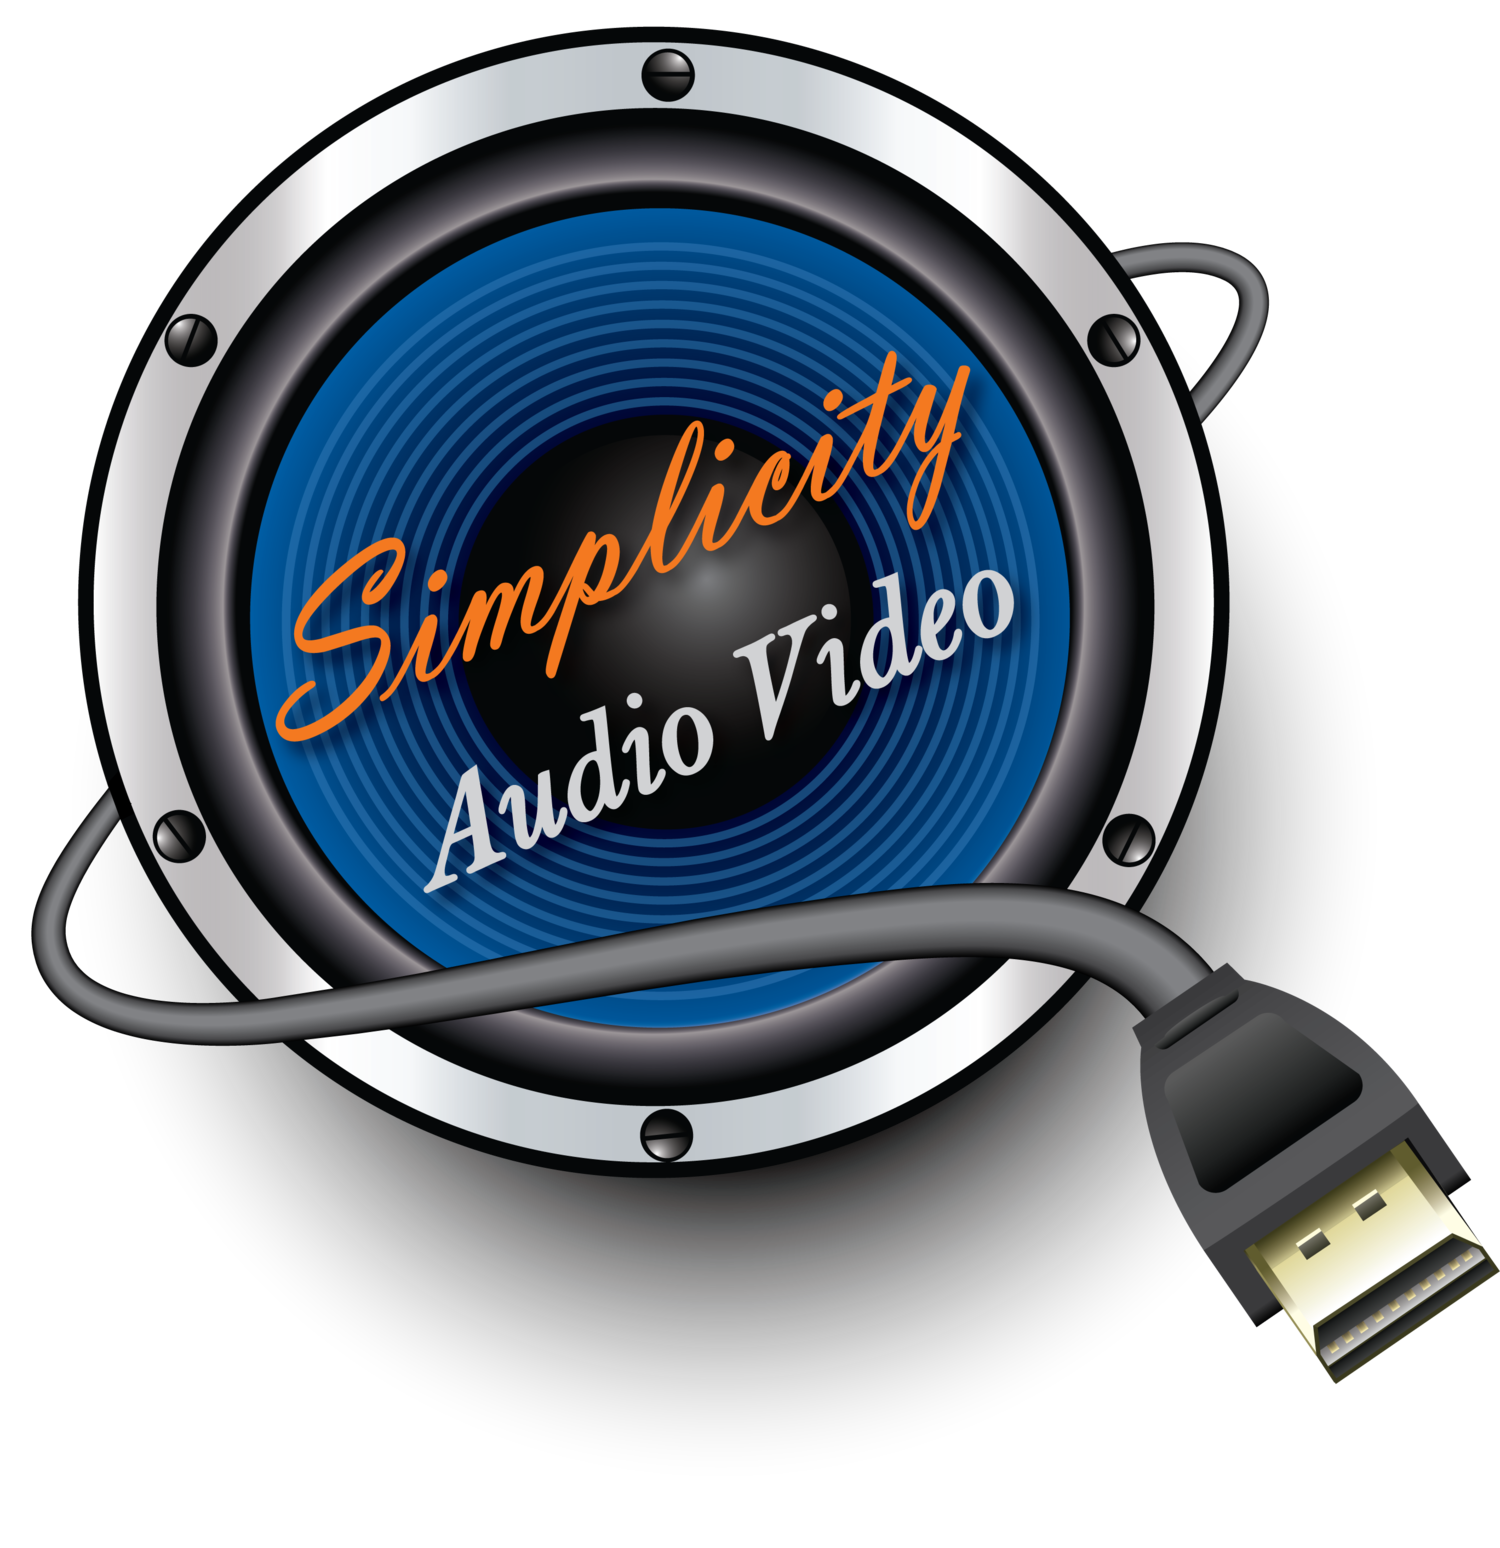 Simplicity Audio Video